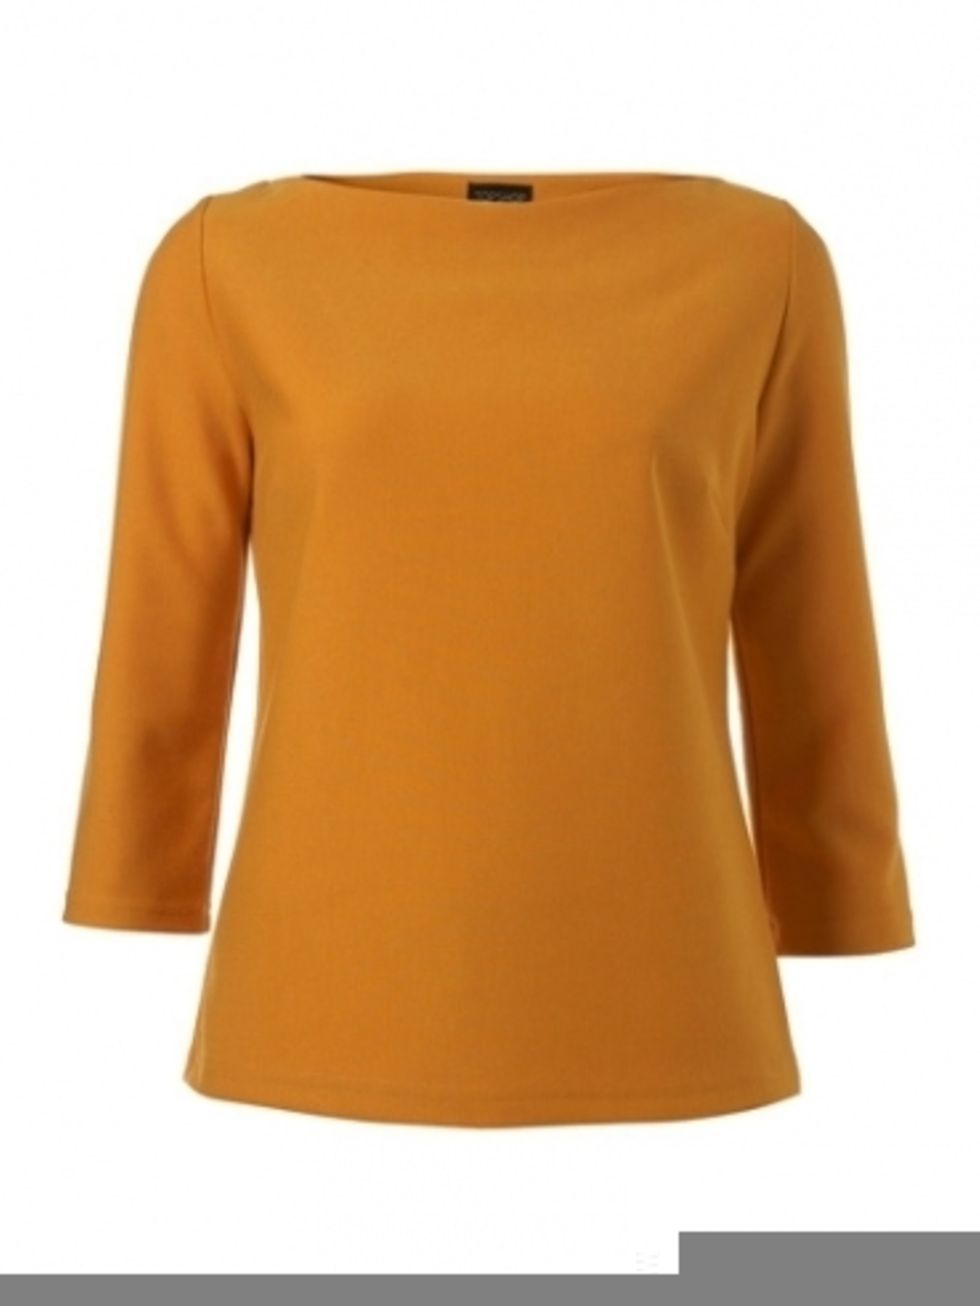 Product, Brown, Yellow, Sleeve, Orange, Textile, Outerwear, White, Collar, Amber, 